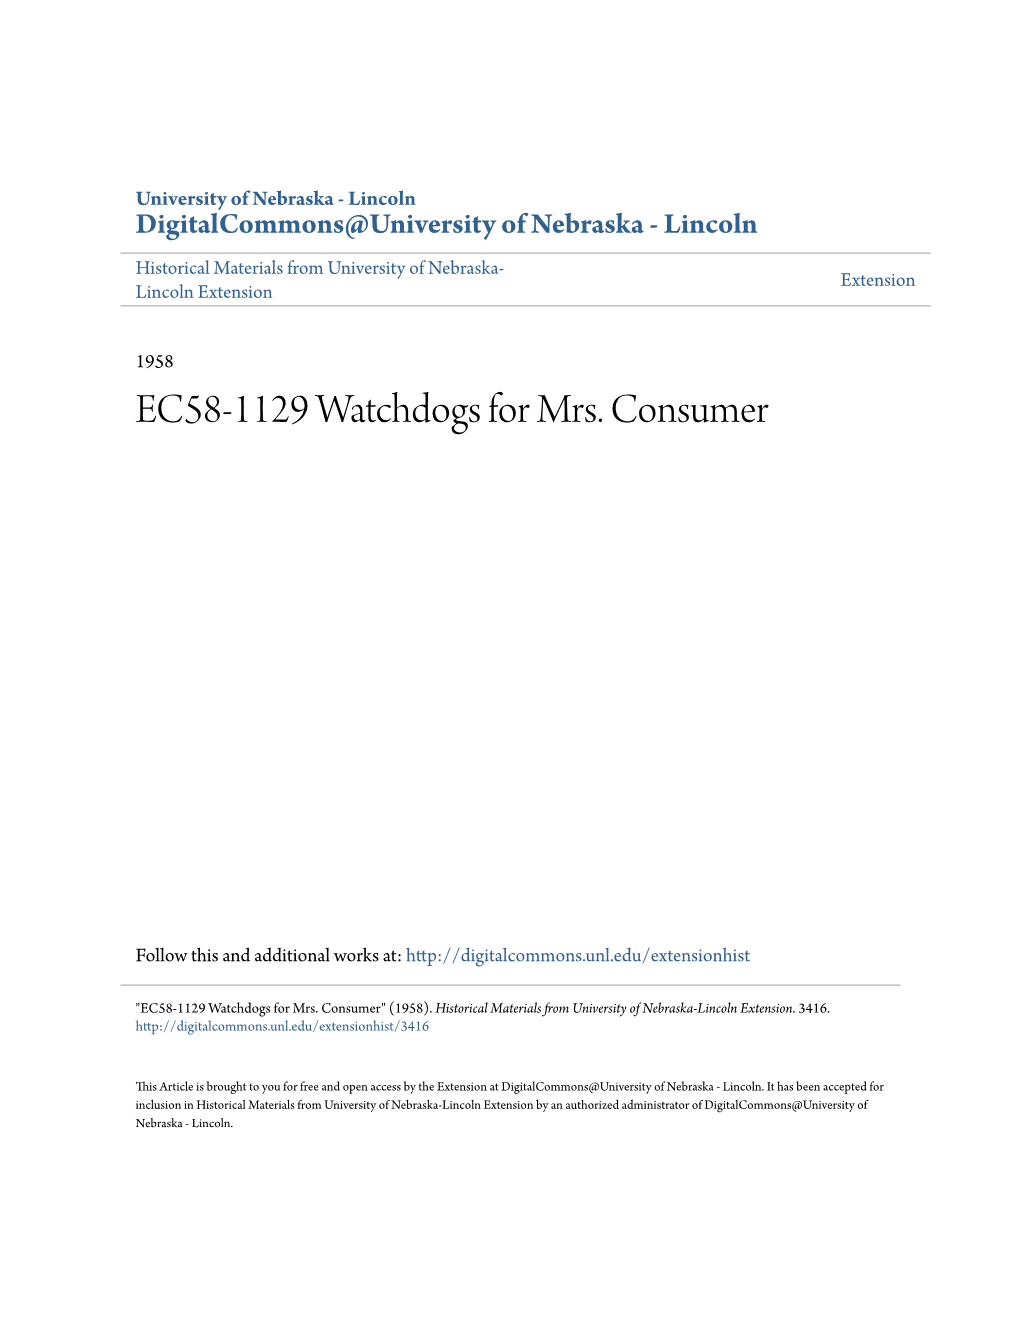 EC58-1129 Watchdogs for Mrs. Consumer